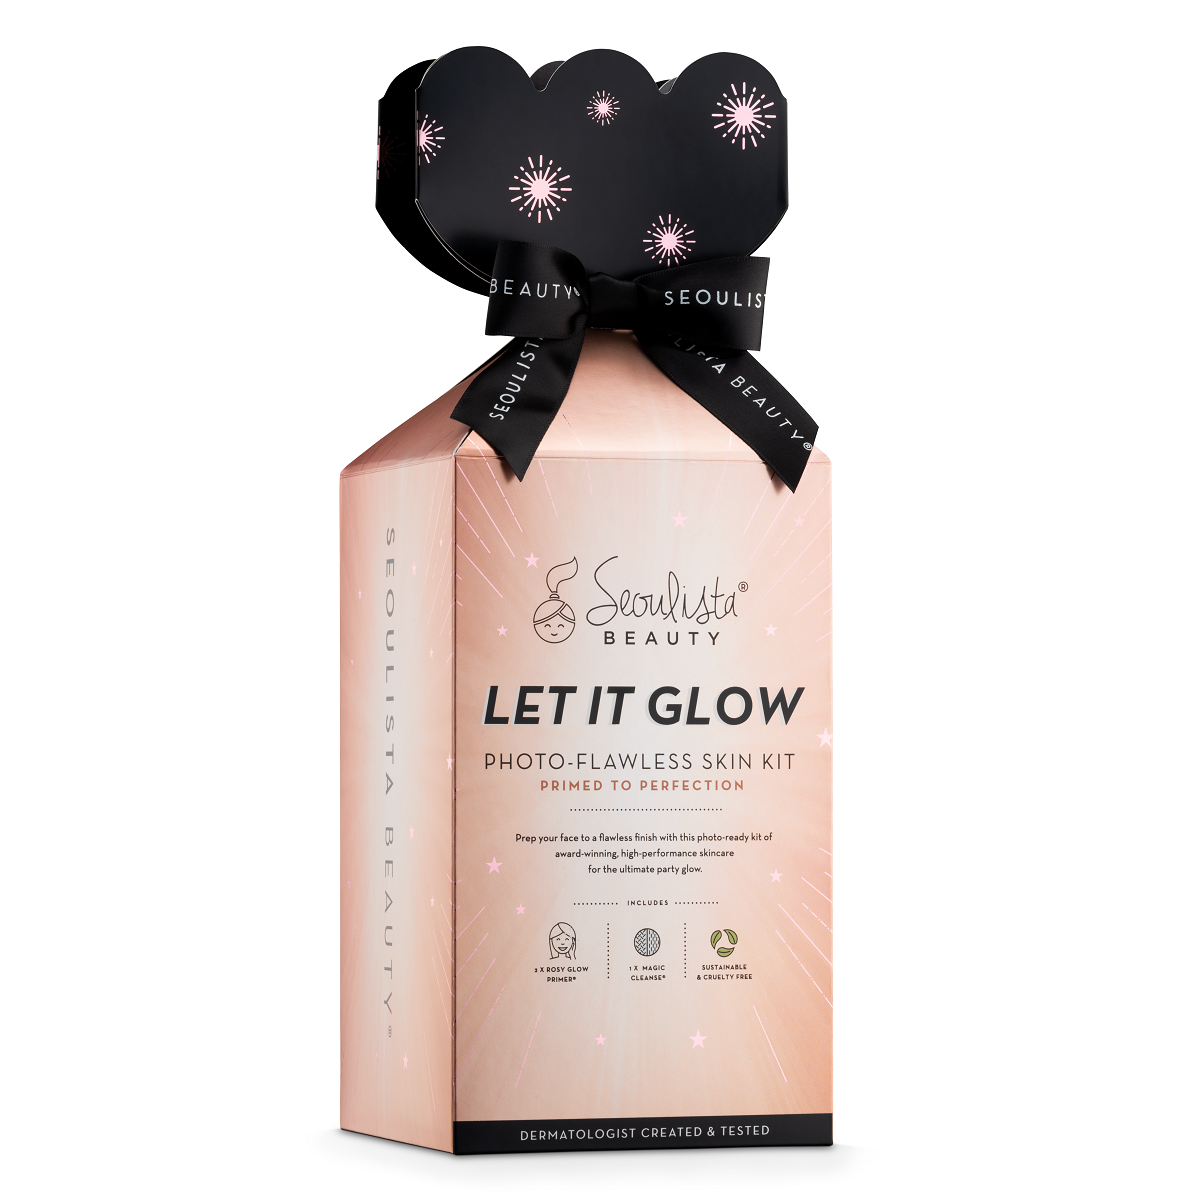 Seoulista Beauty Let It Glow! Cleanse & Prep Party Skin Kit.